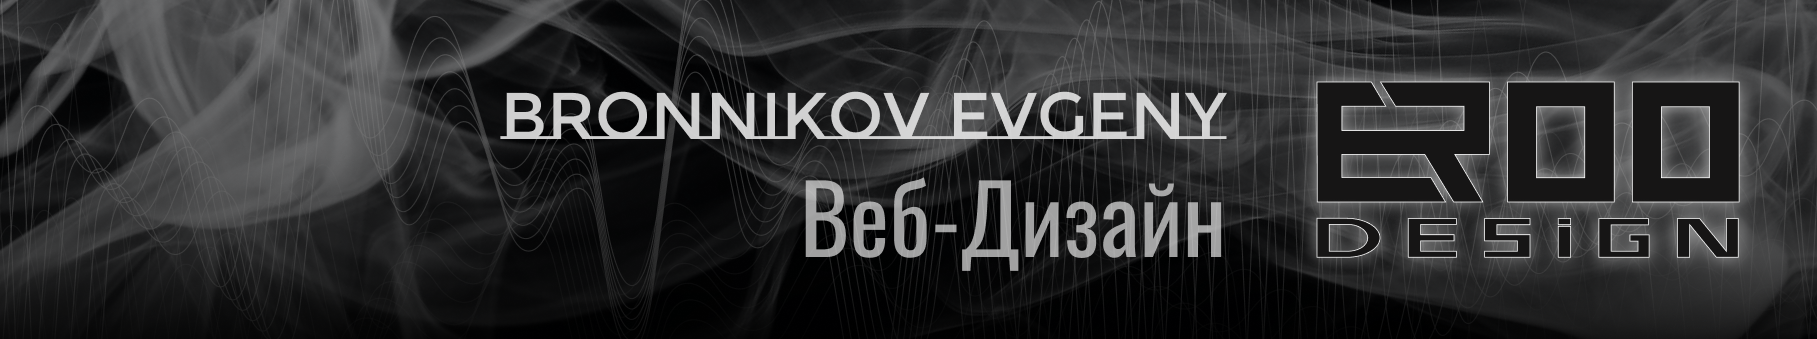 Banner de perfil de Евгений Бронников